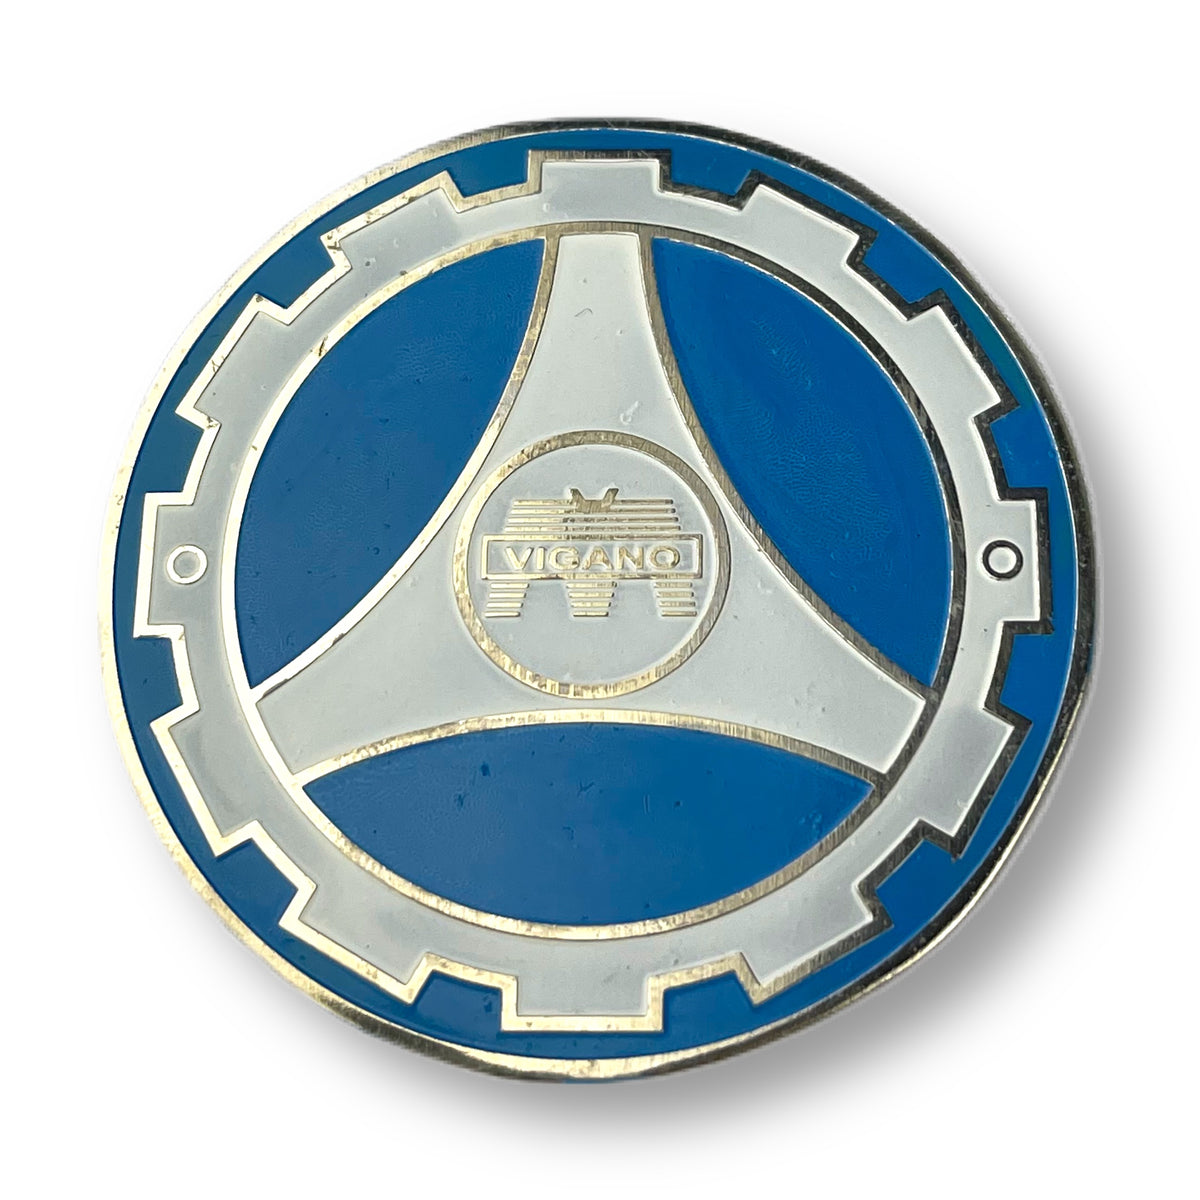 Lambretta Vigano Round Badge 52mm - Blue